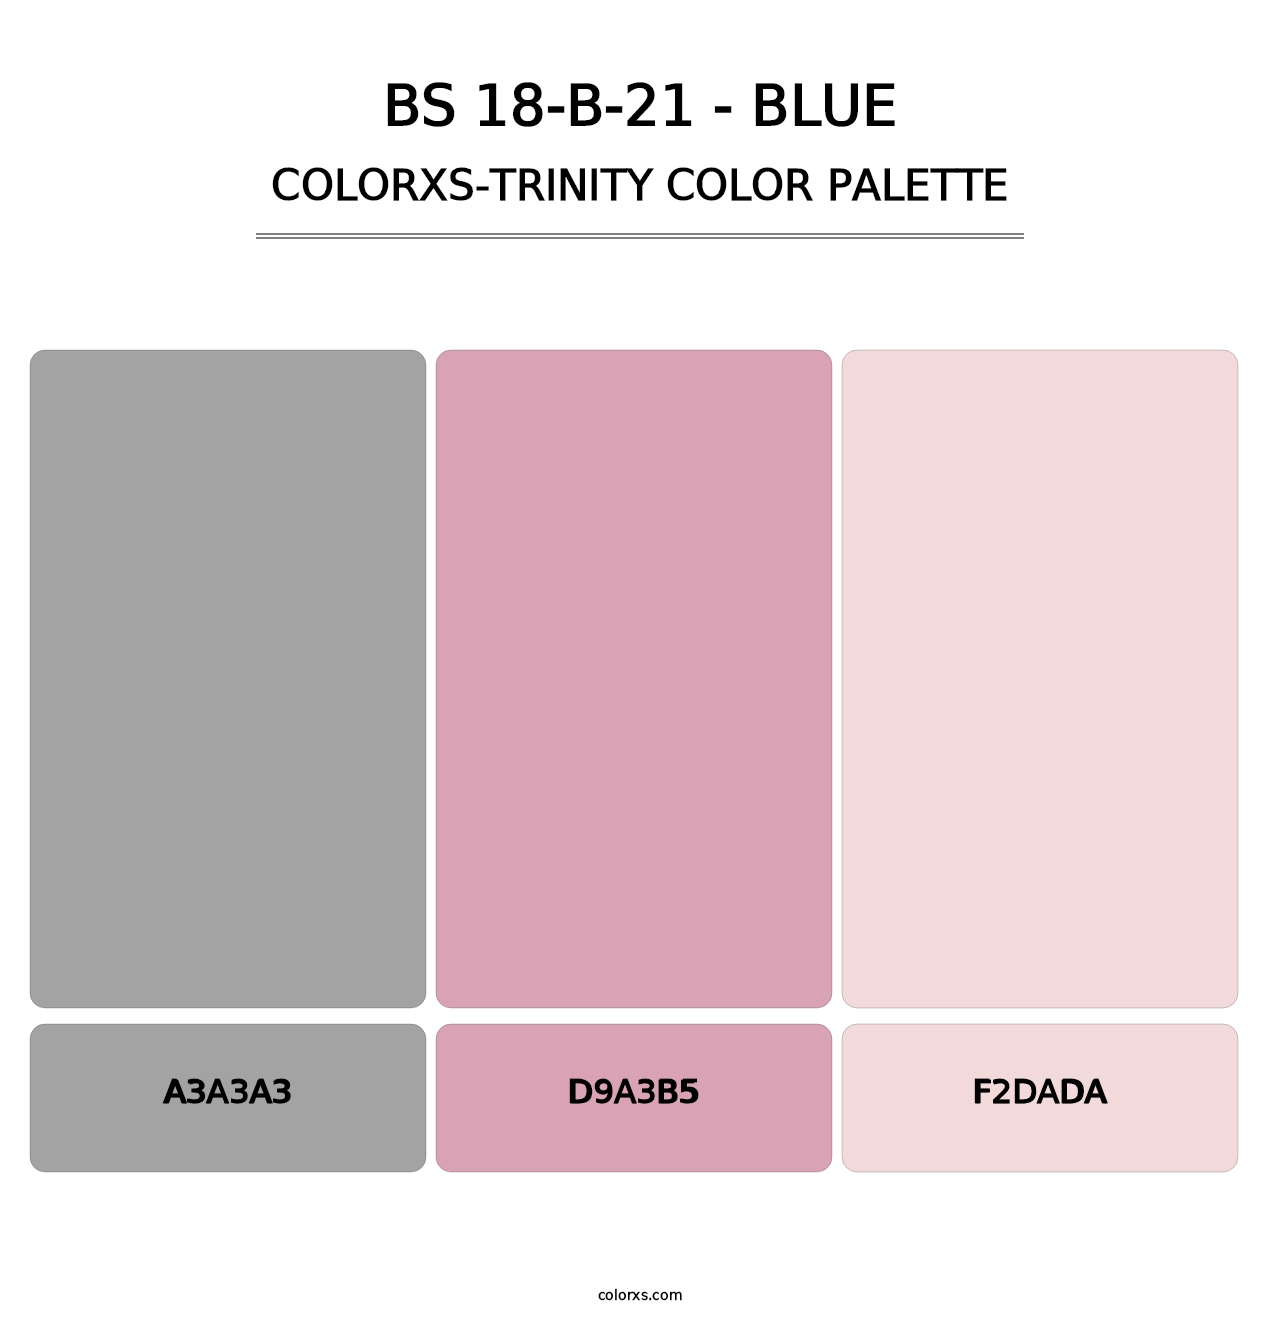 BS 18-B-21 - Blue - Colorxs Trinity Palette